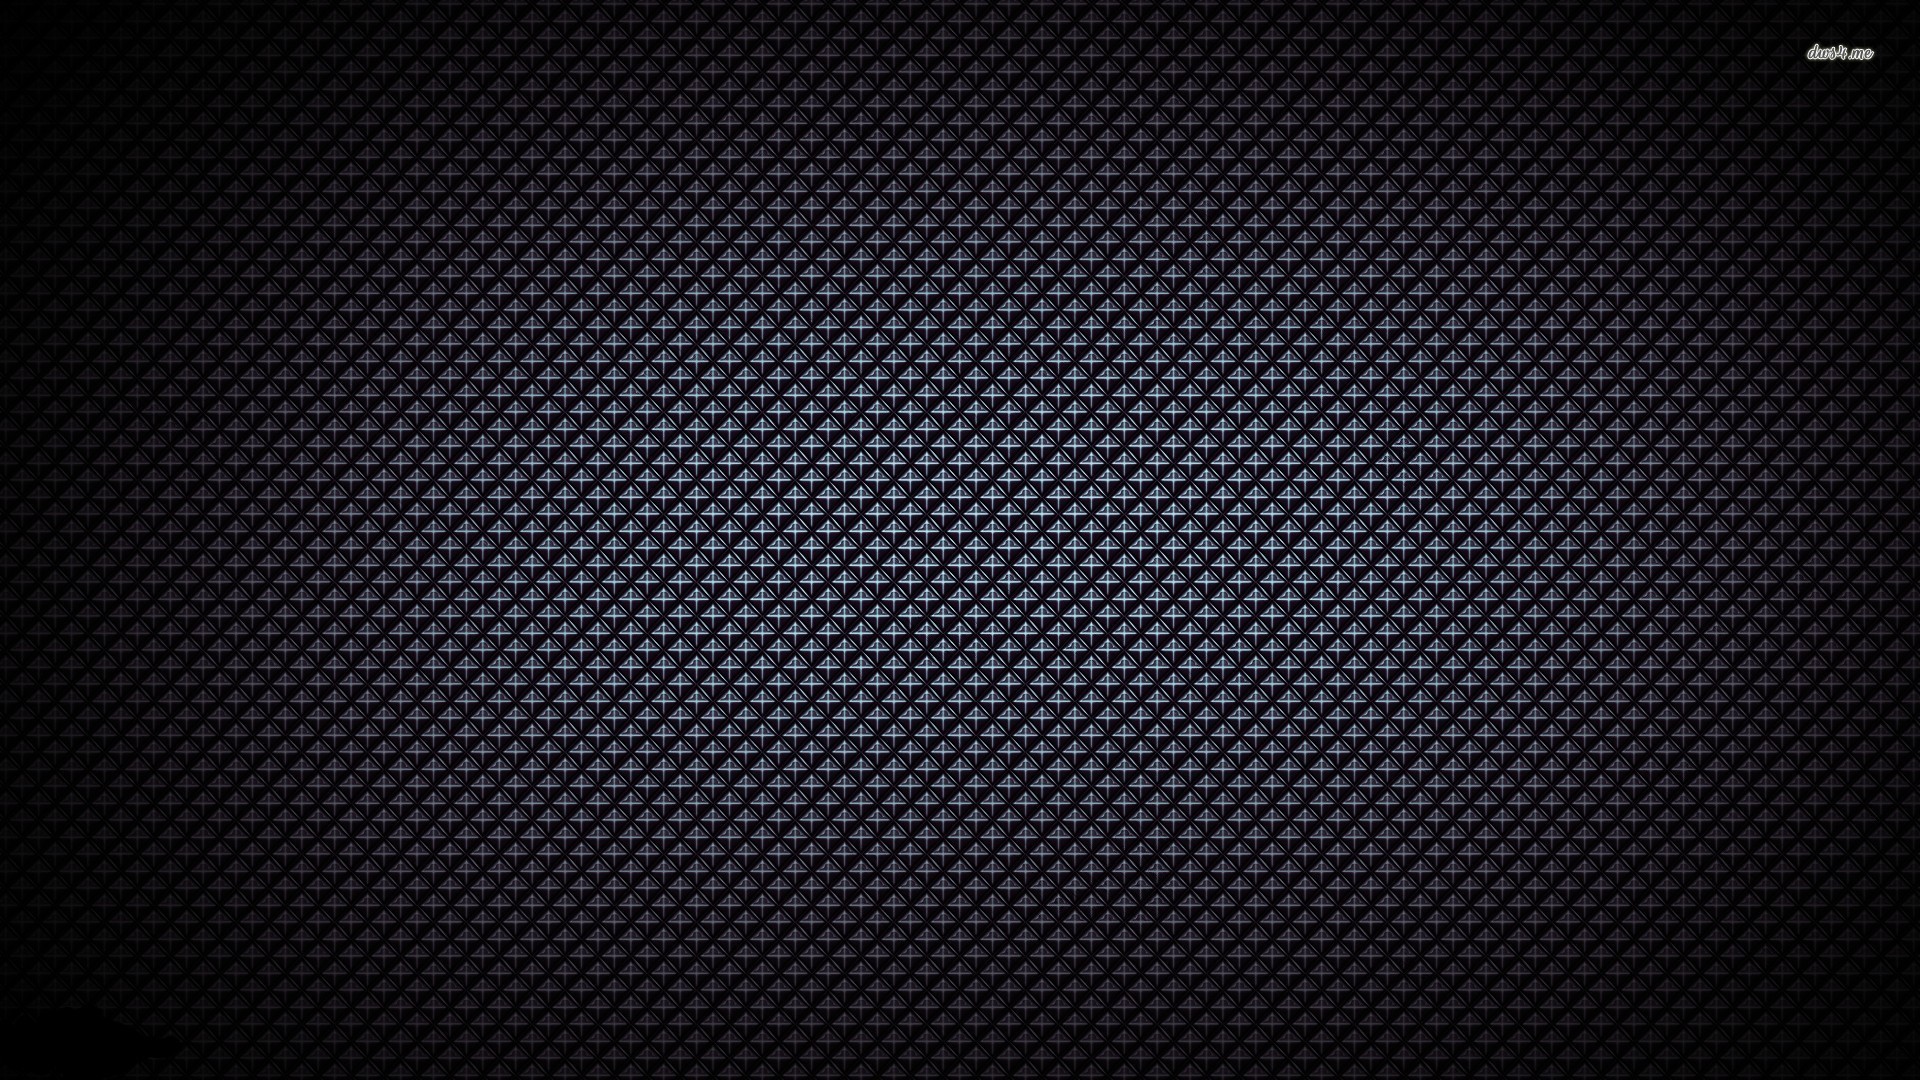 1920x1080 Diamond pattern wallpaper 824612 